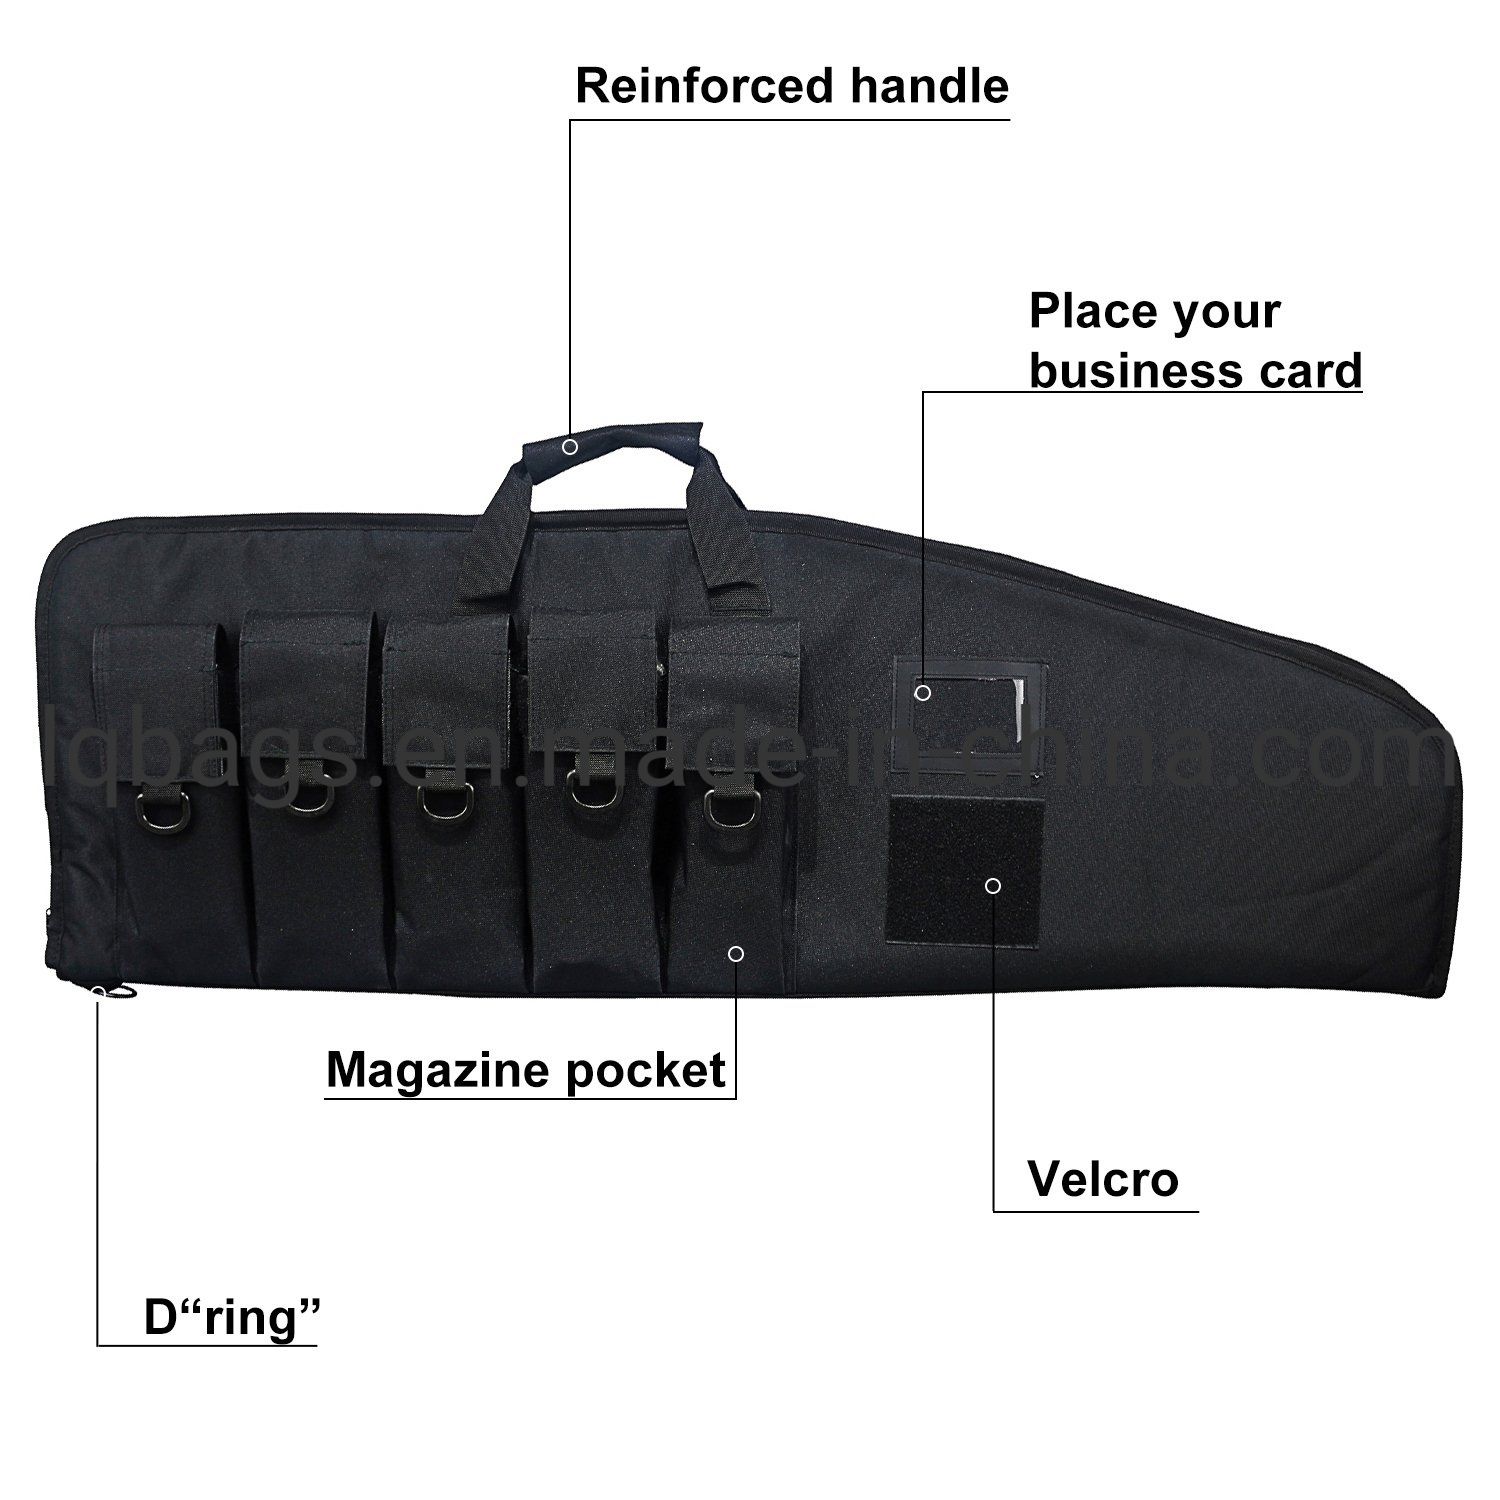 Camouflage Long Gun Case Military Gun Bag Tactical Rifle Bag